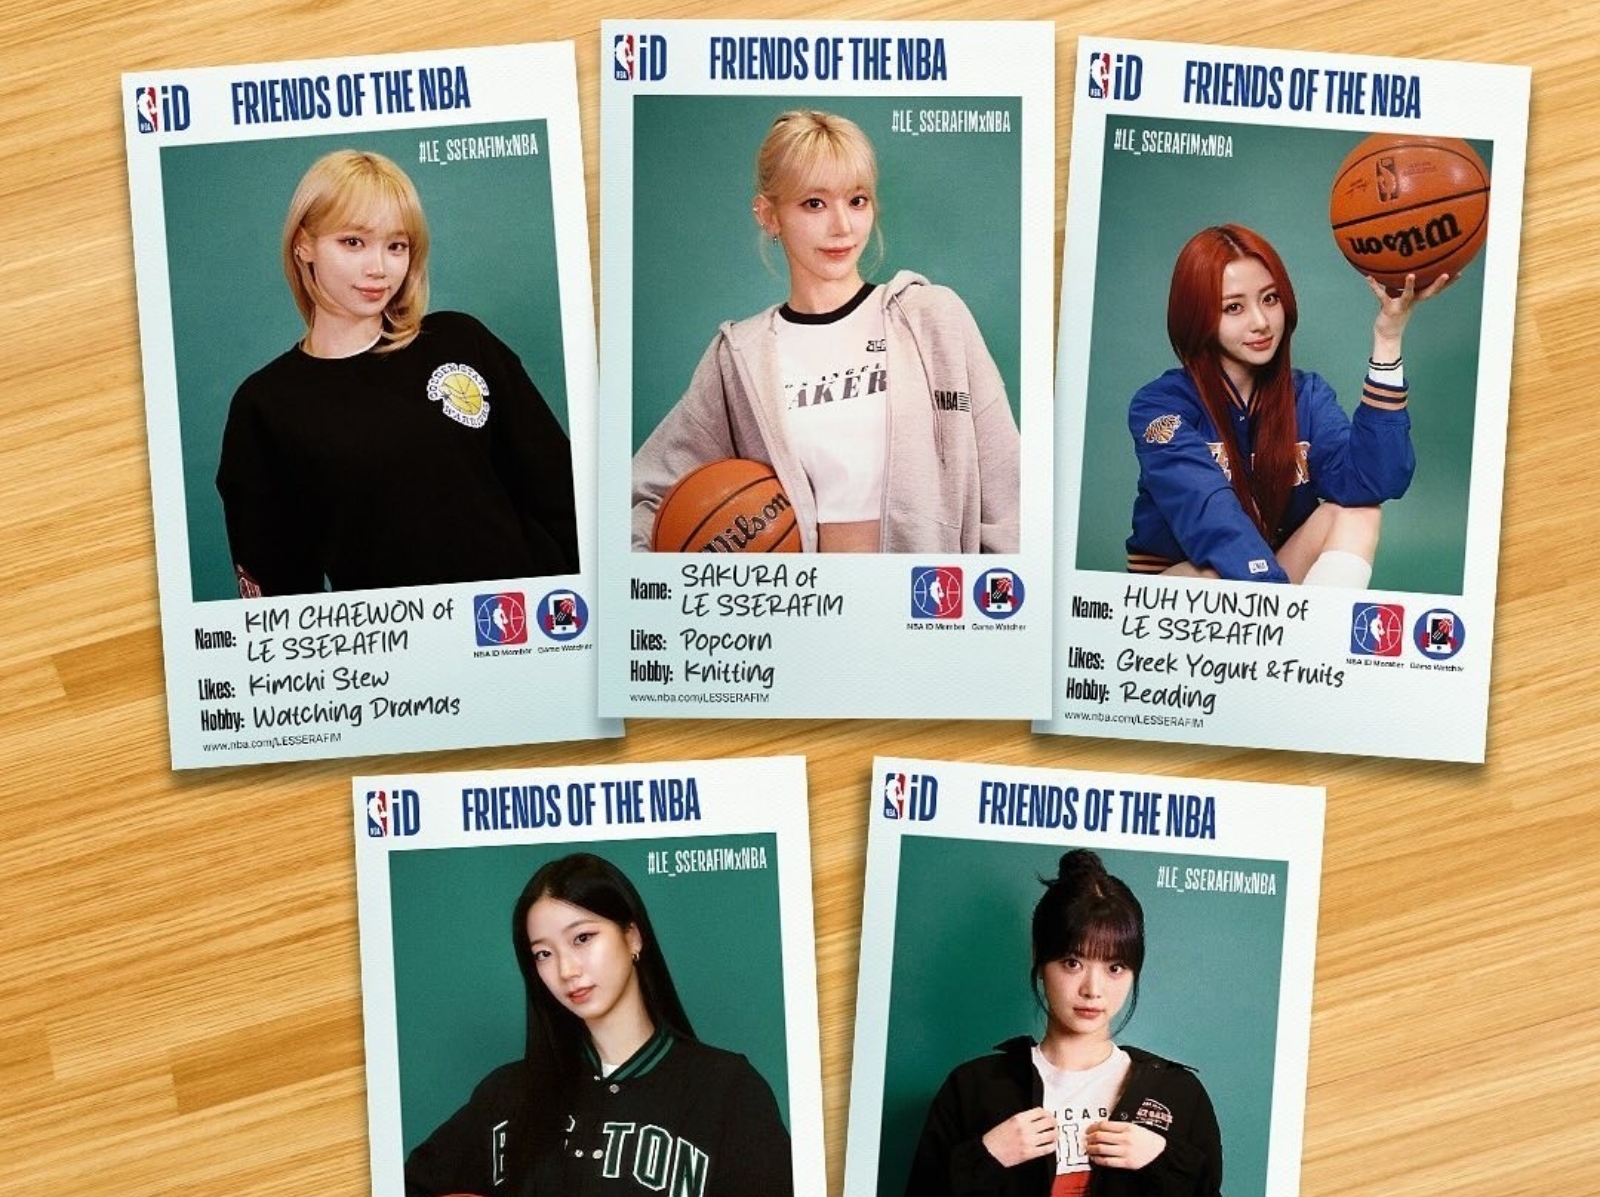 LE SSERAFIM 正式成為「NBA 之友」，史上首支與 NBA 合作的韓國女團！